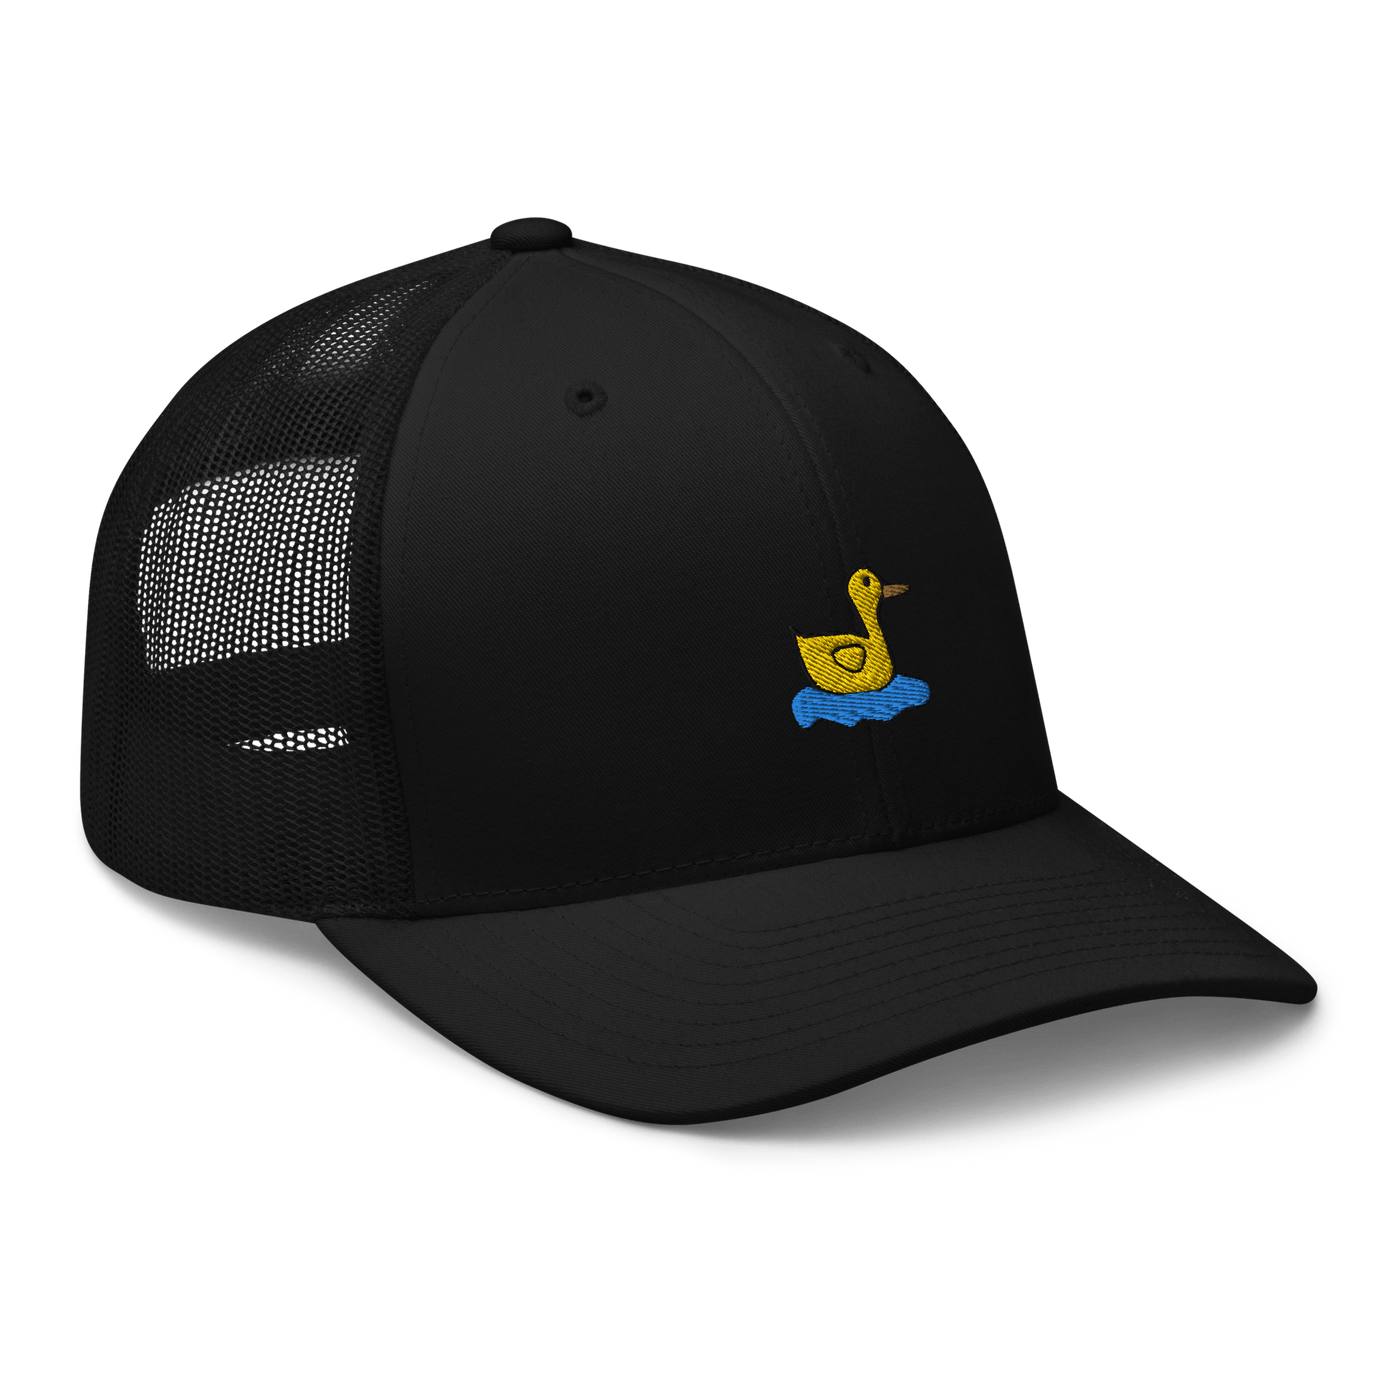 Lonely Duck Trucker Cap - Black - - Just Another Cap Store